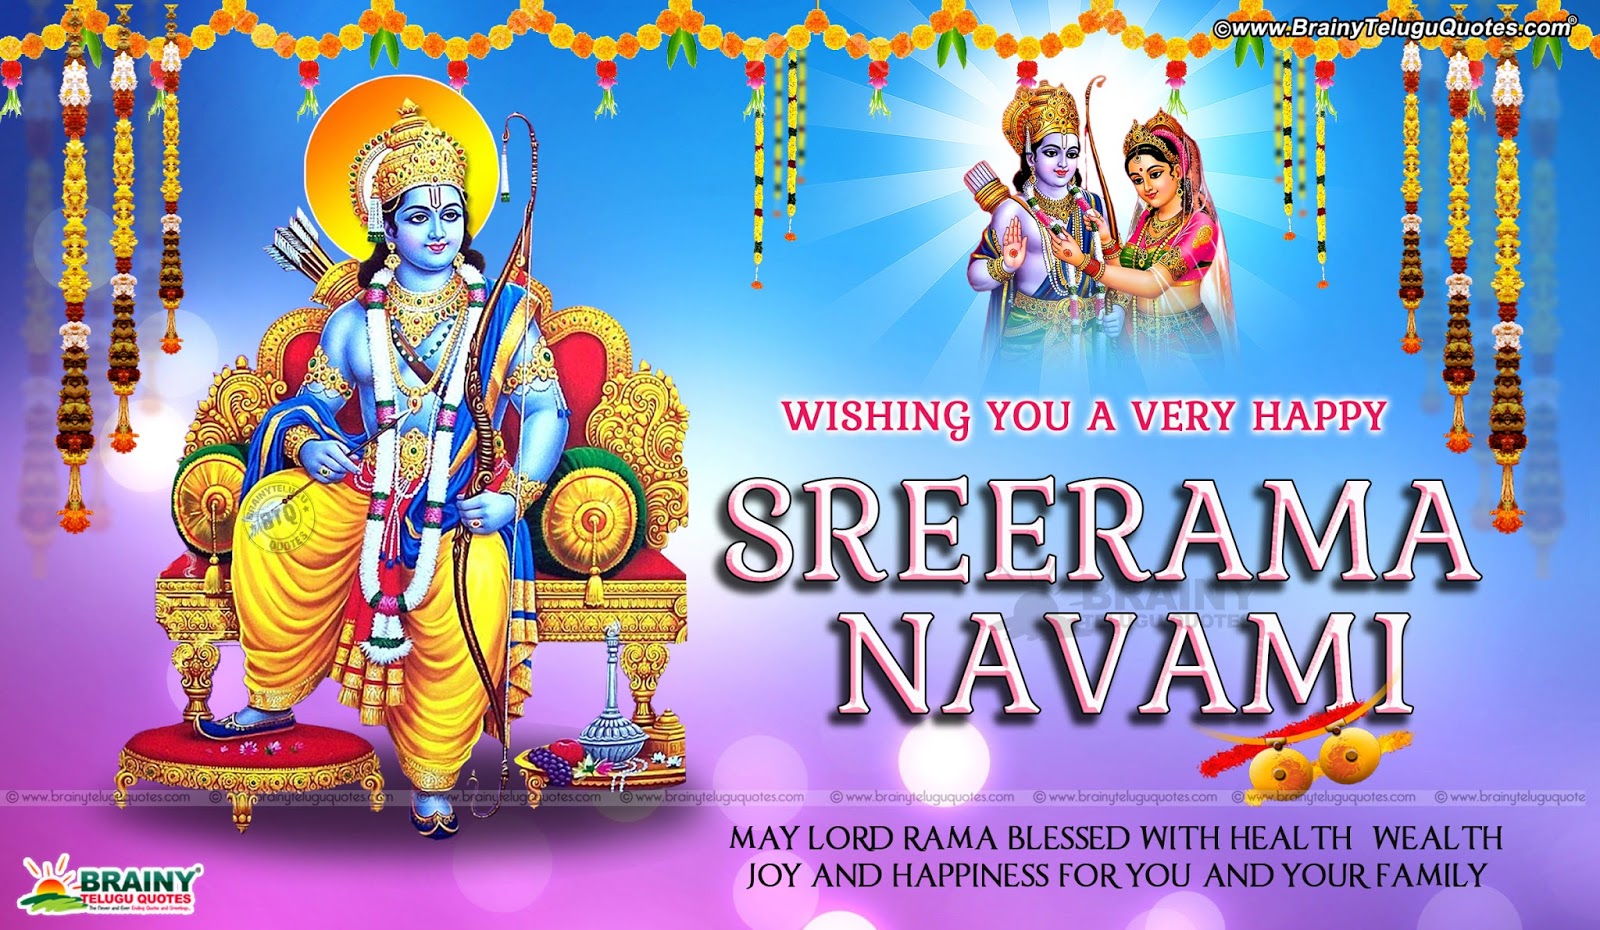 Sree Ramanavami Hd Wallpapers Free Download, Hindu - रामनवमी की हार्दिक शुभकामनाएं Hd - HD Wallpaper 